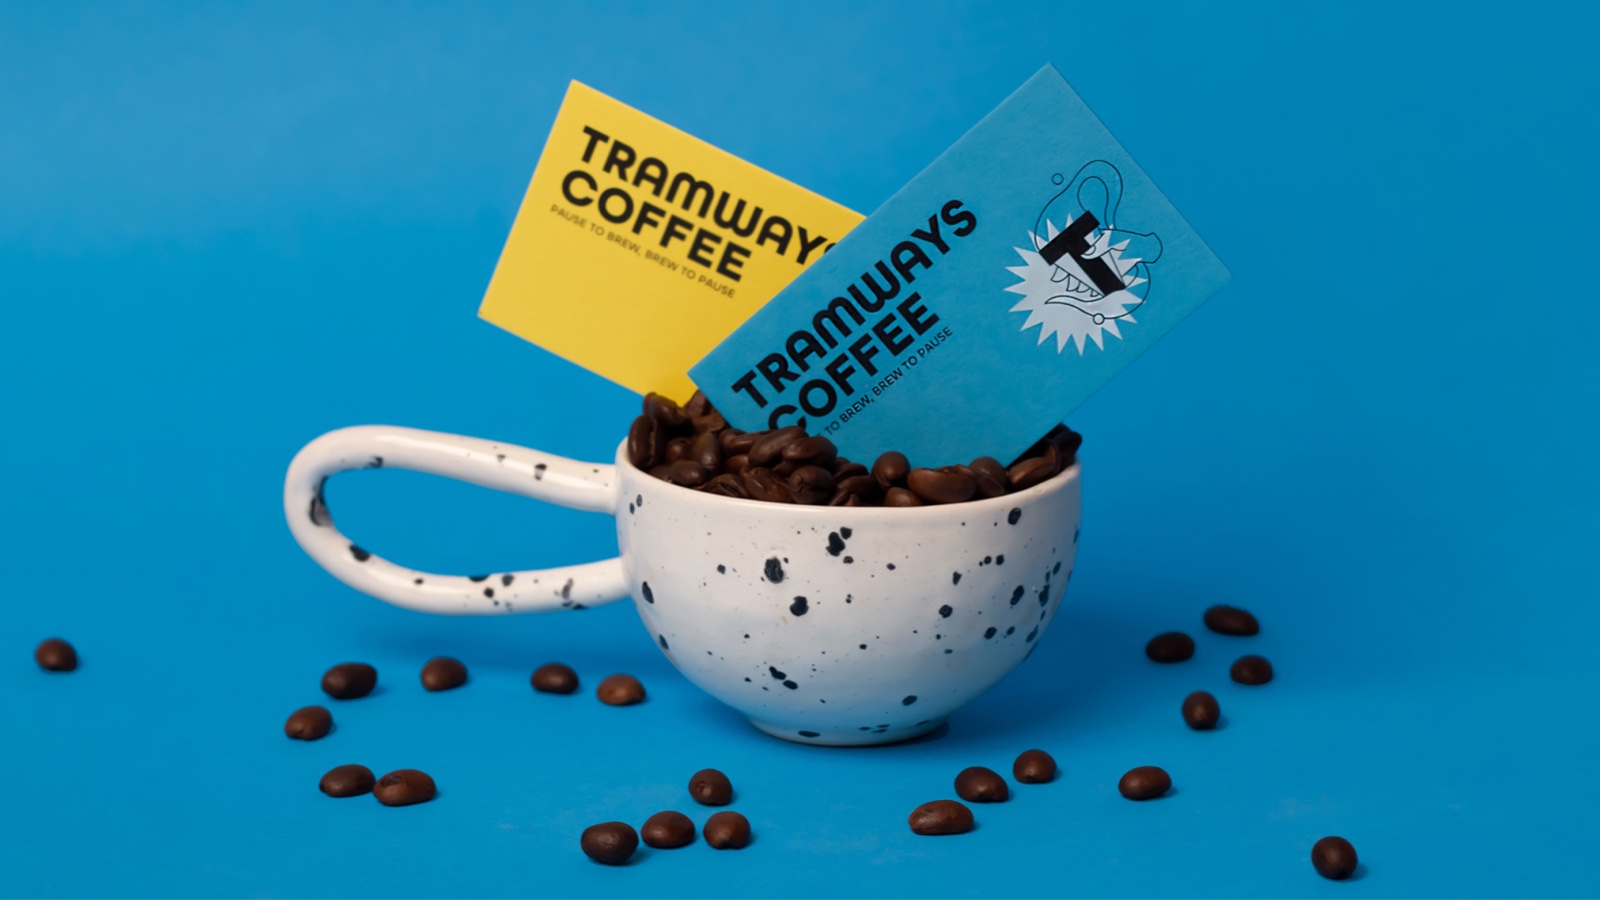 TRAMWAYS COFFEE咖啡包装设计欣赏